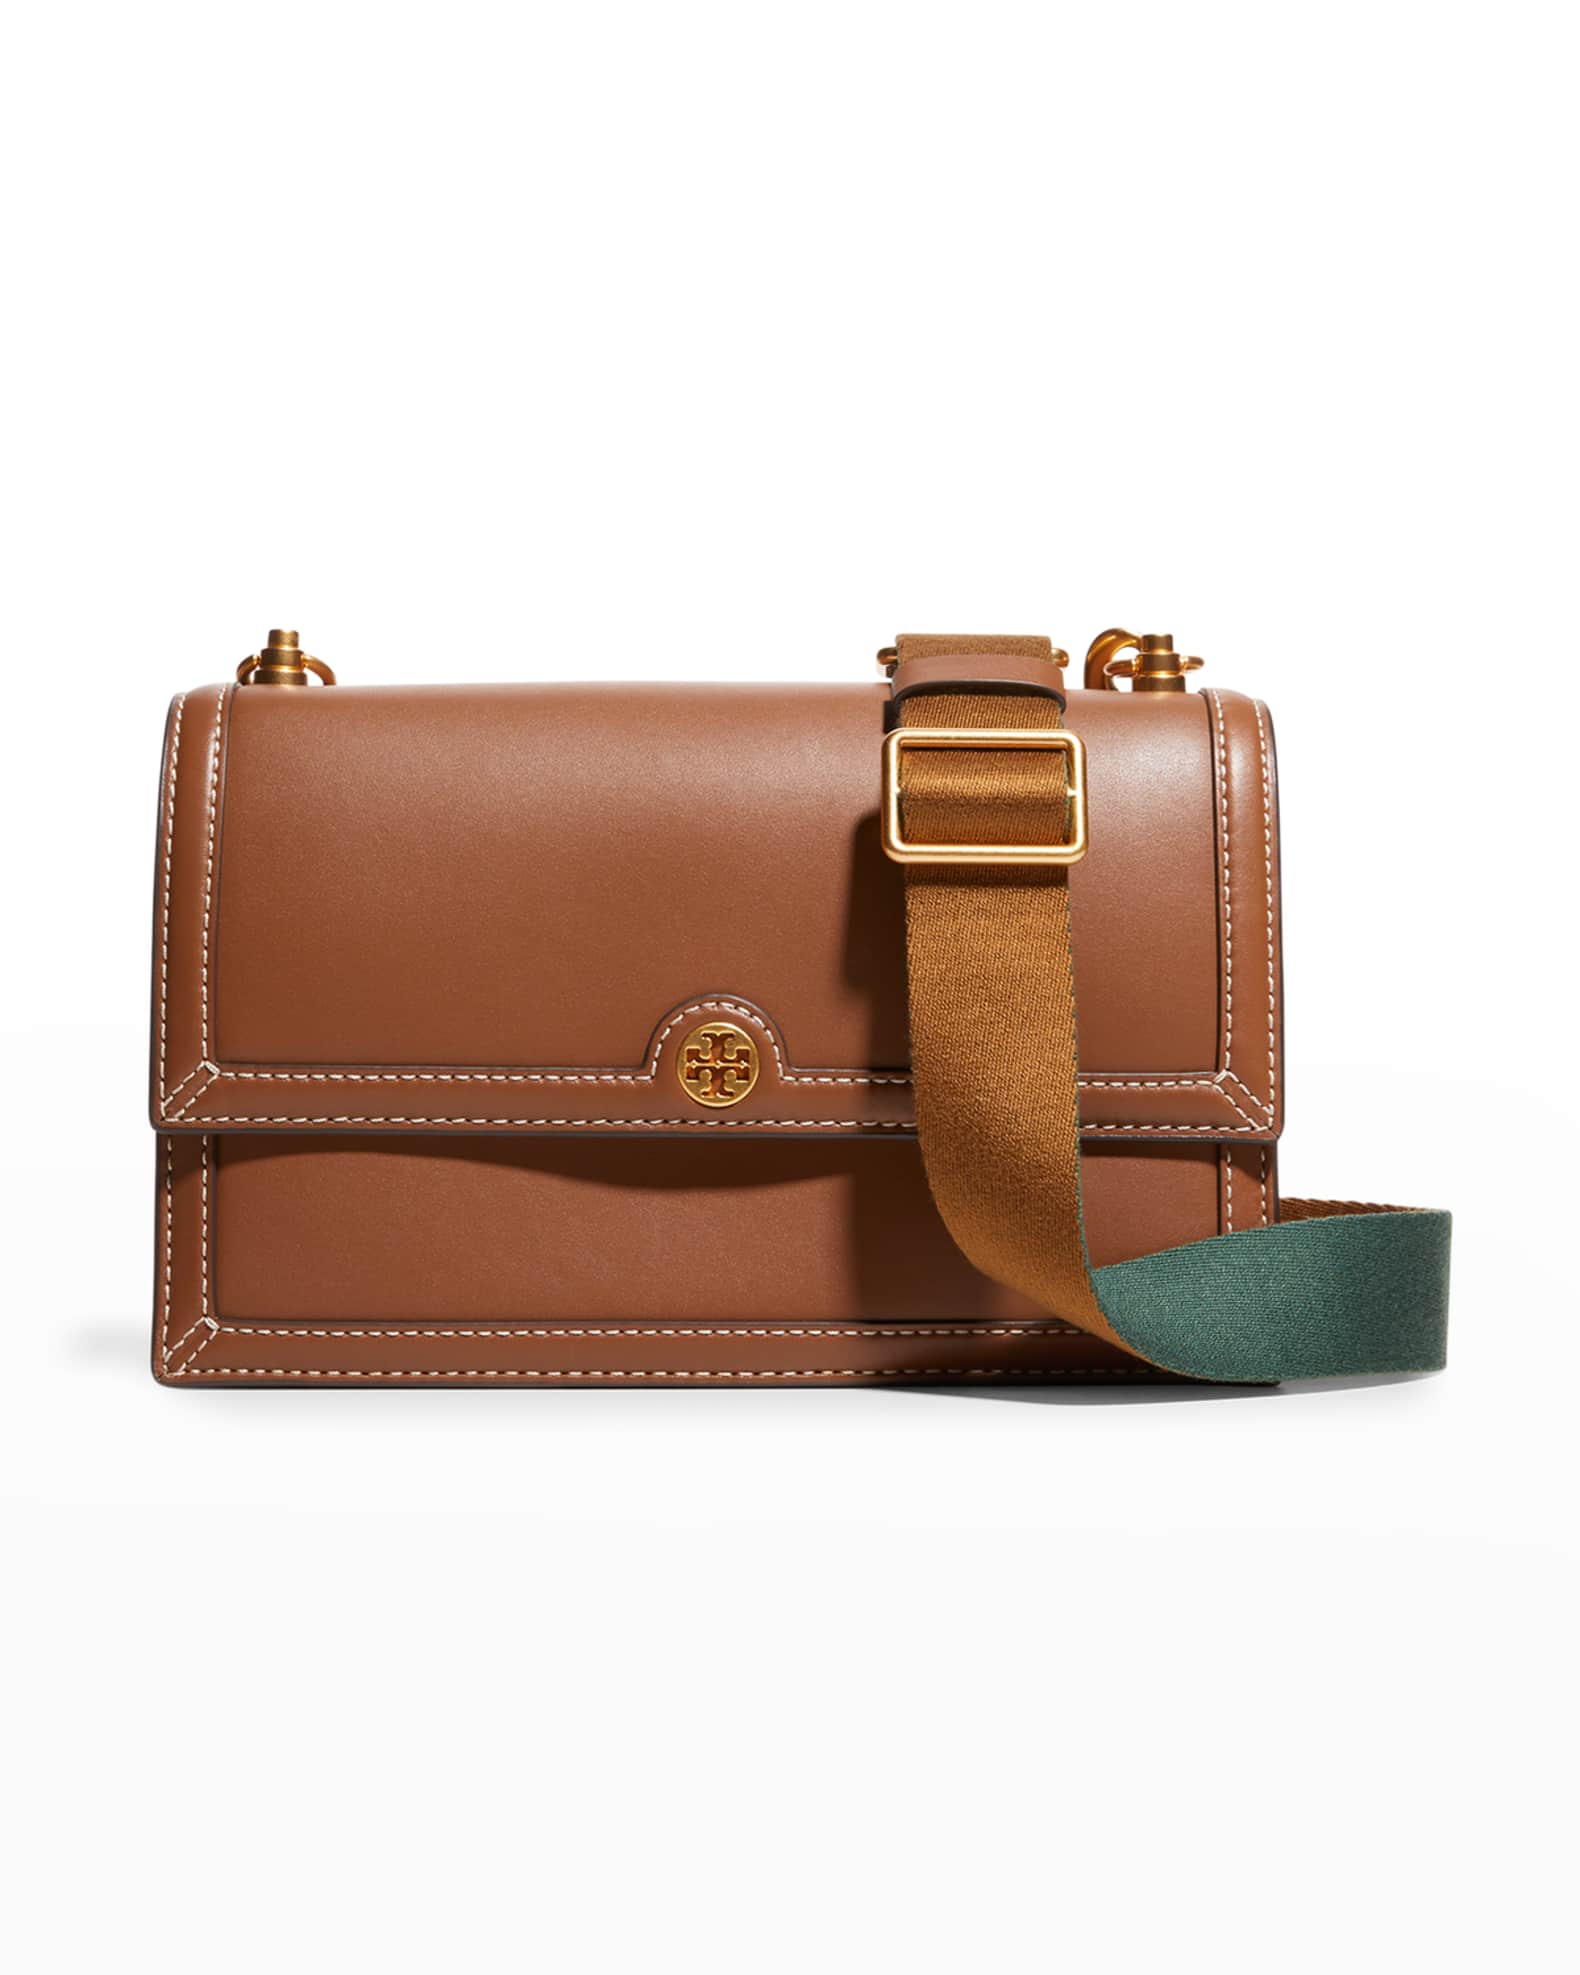 Tory Burch T Monogram Leather Shoulder Bag | Neiman Marcus